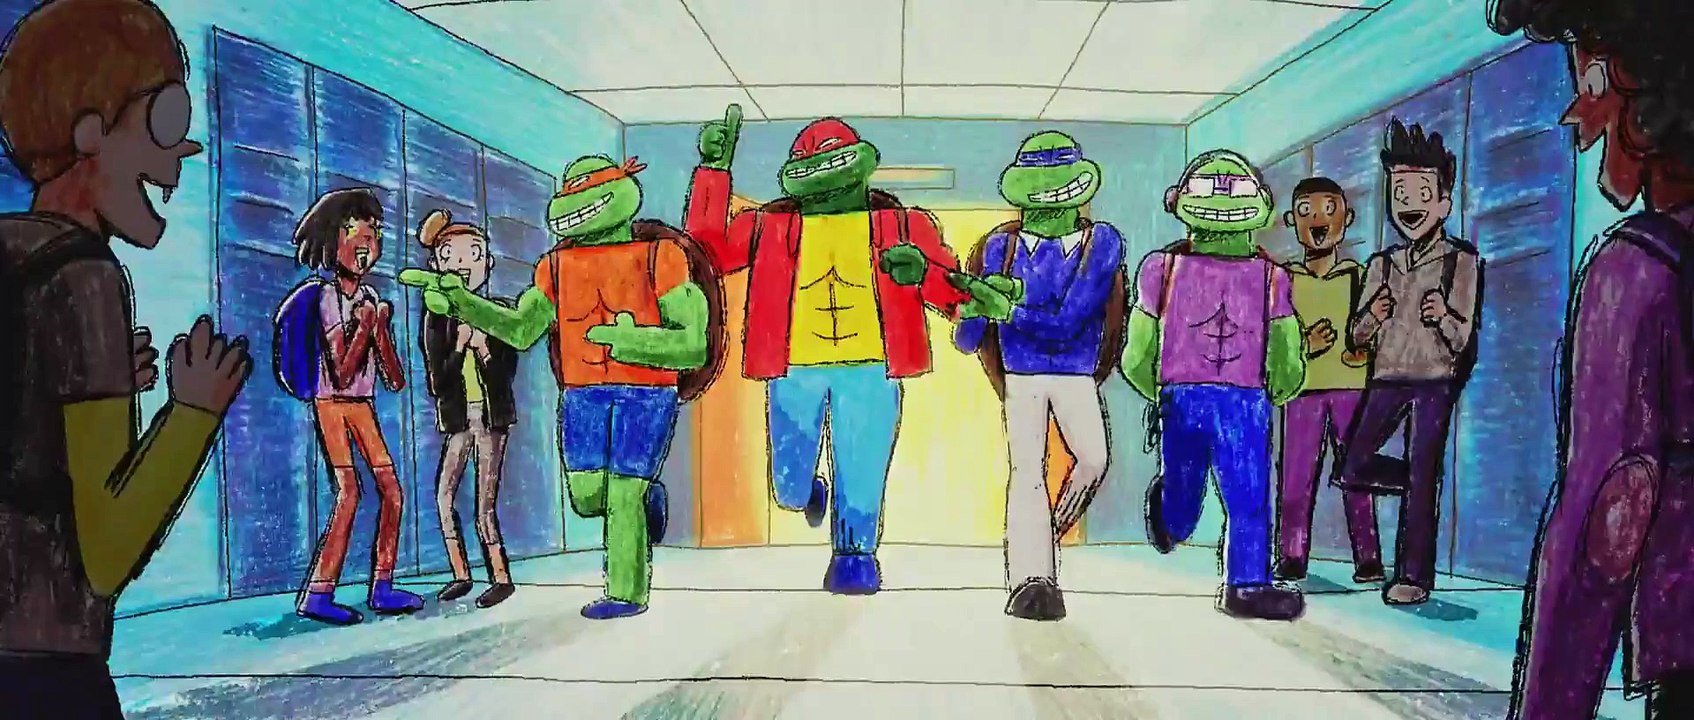 Teenage Mutant Ninja Turtles- Mutant Mayhem Full Movie Watch Online 123Movies